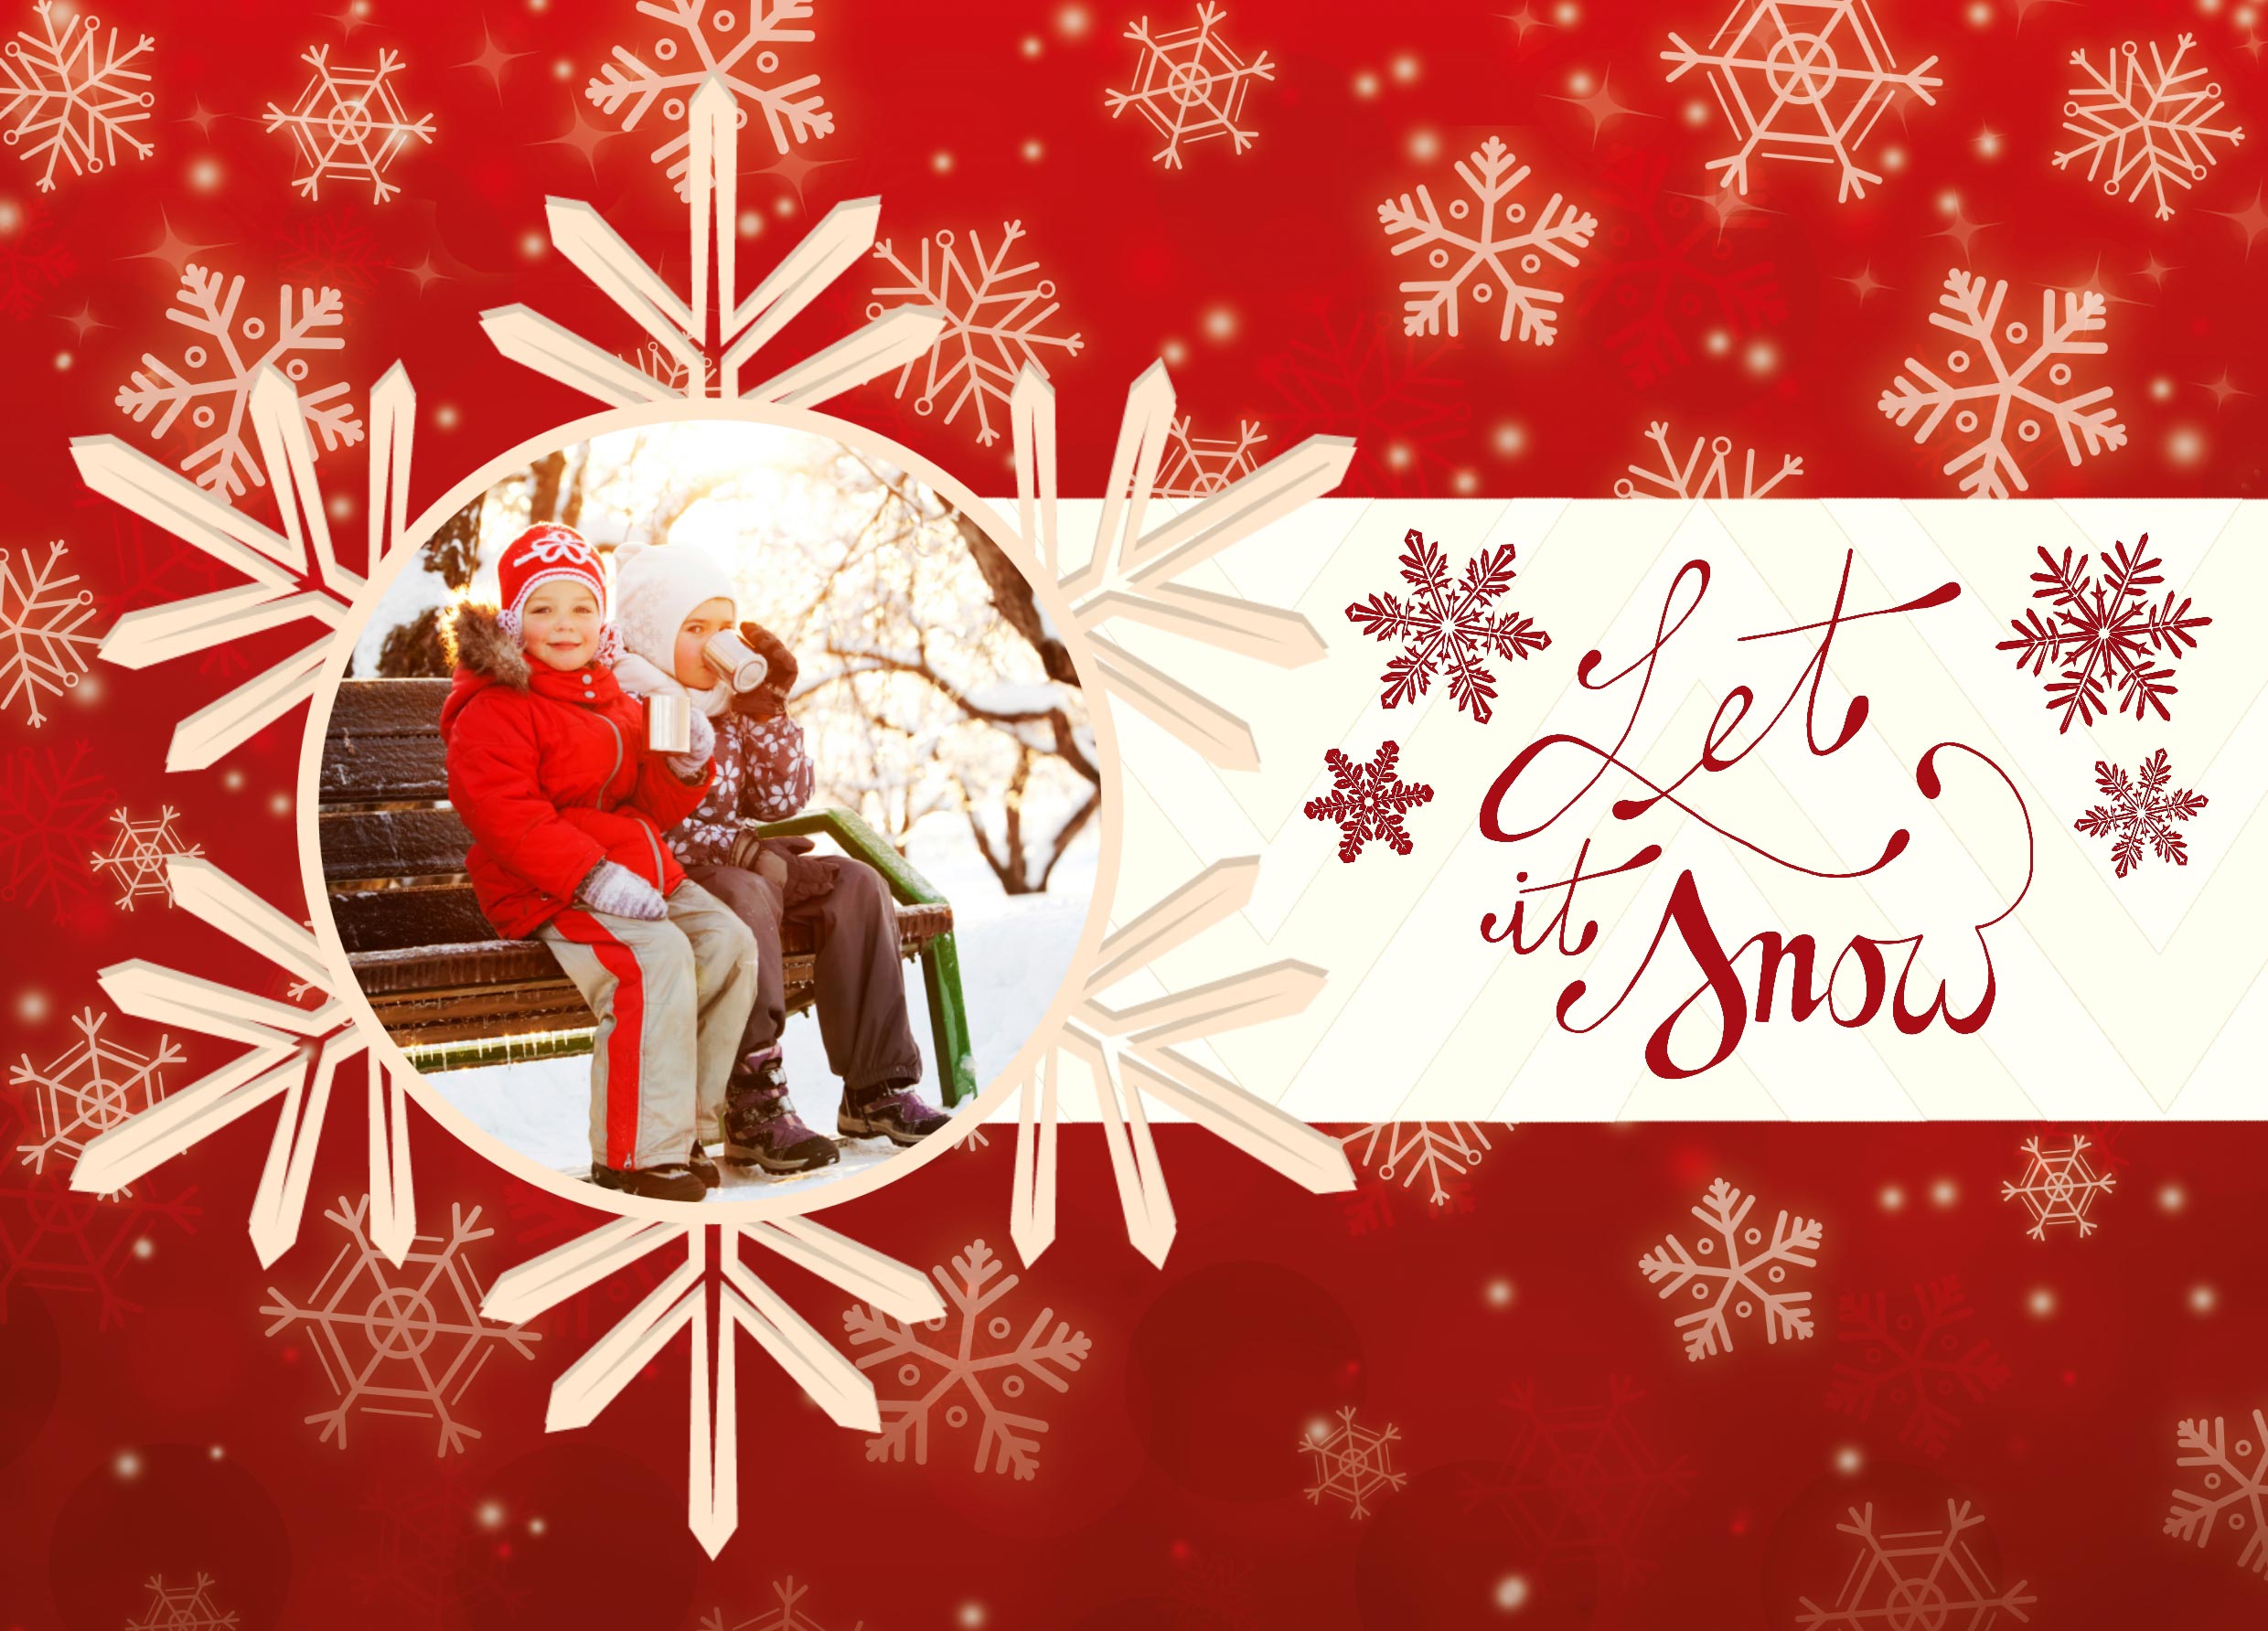 Sjieke 'let it snow' kerstkaart met rode kristallen achtergrond